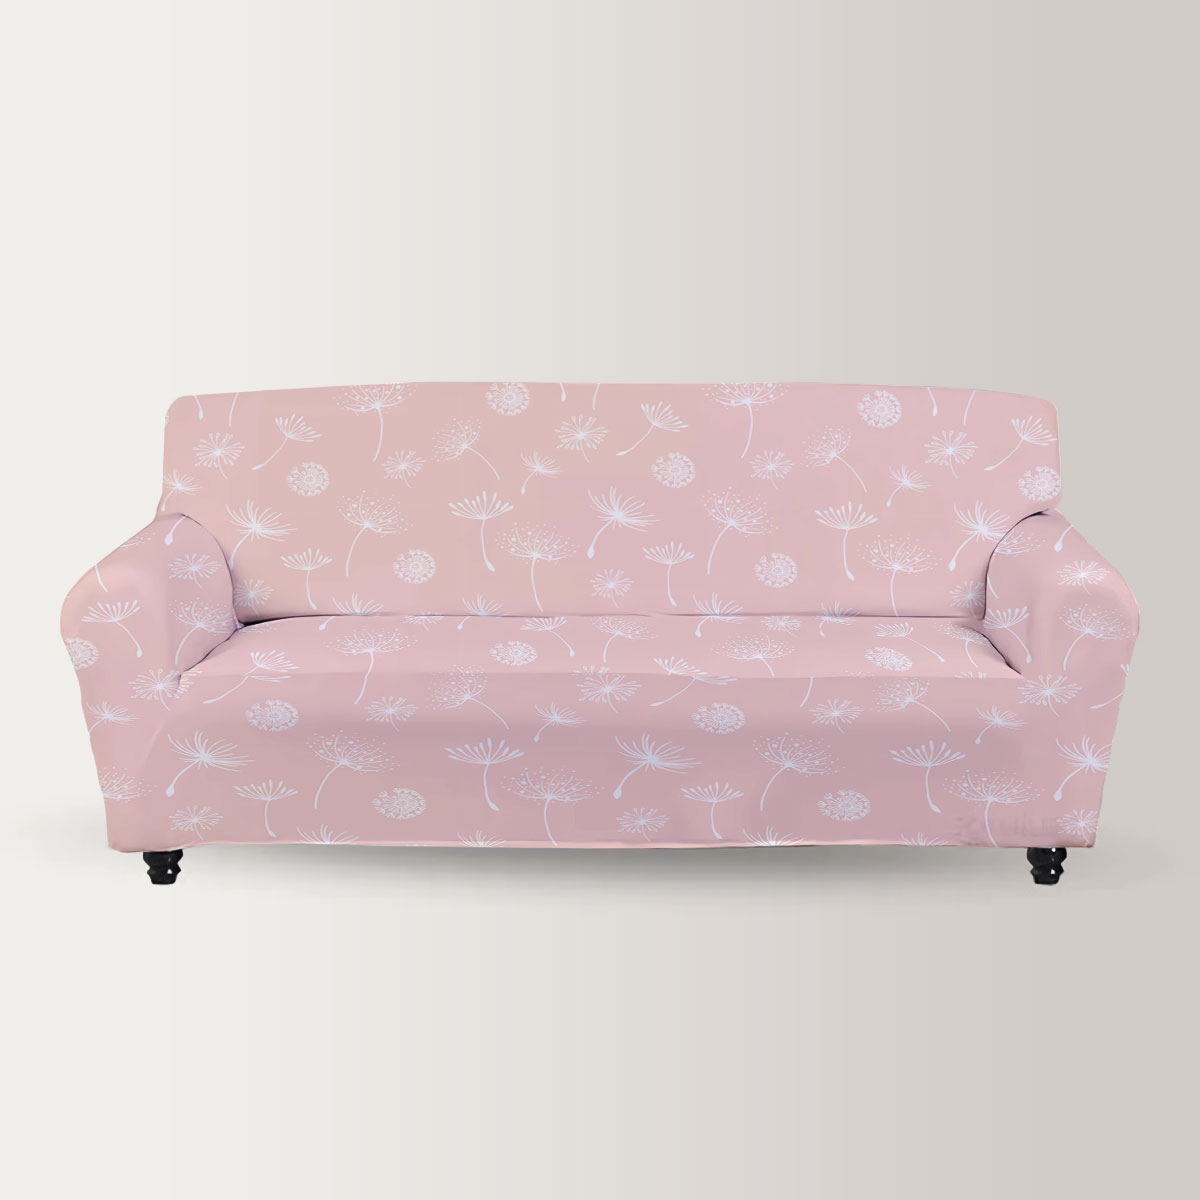 Dandelion On Pink  Background Sofa Cover